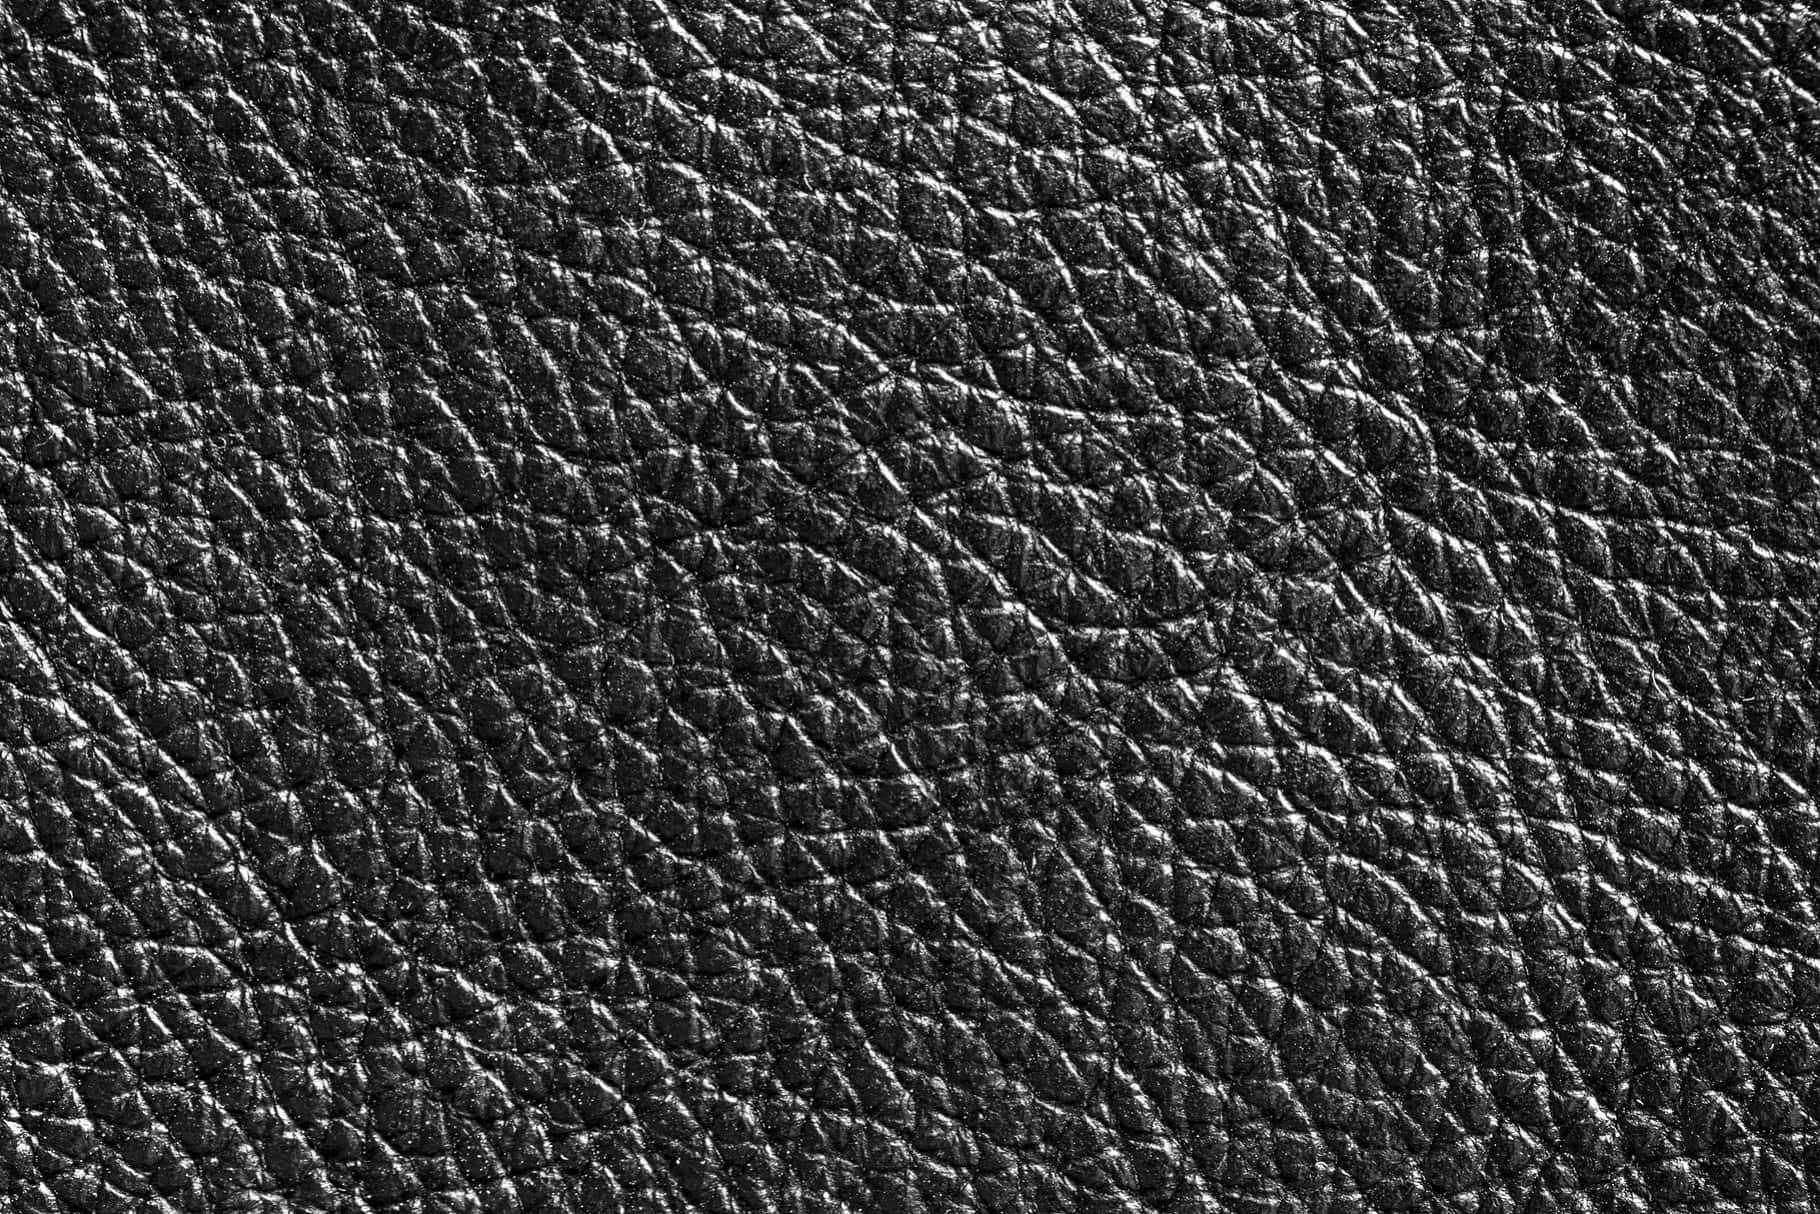 Refined Minimalism: Black Leather